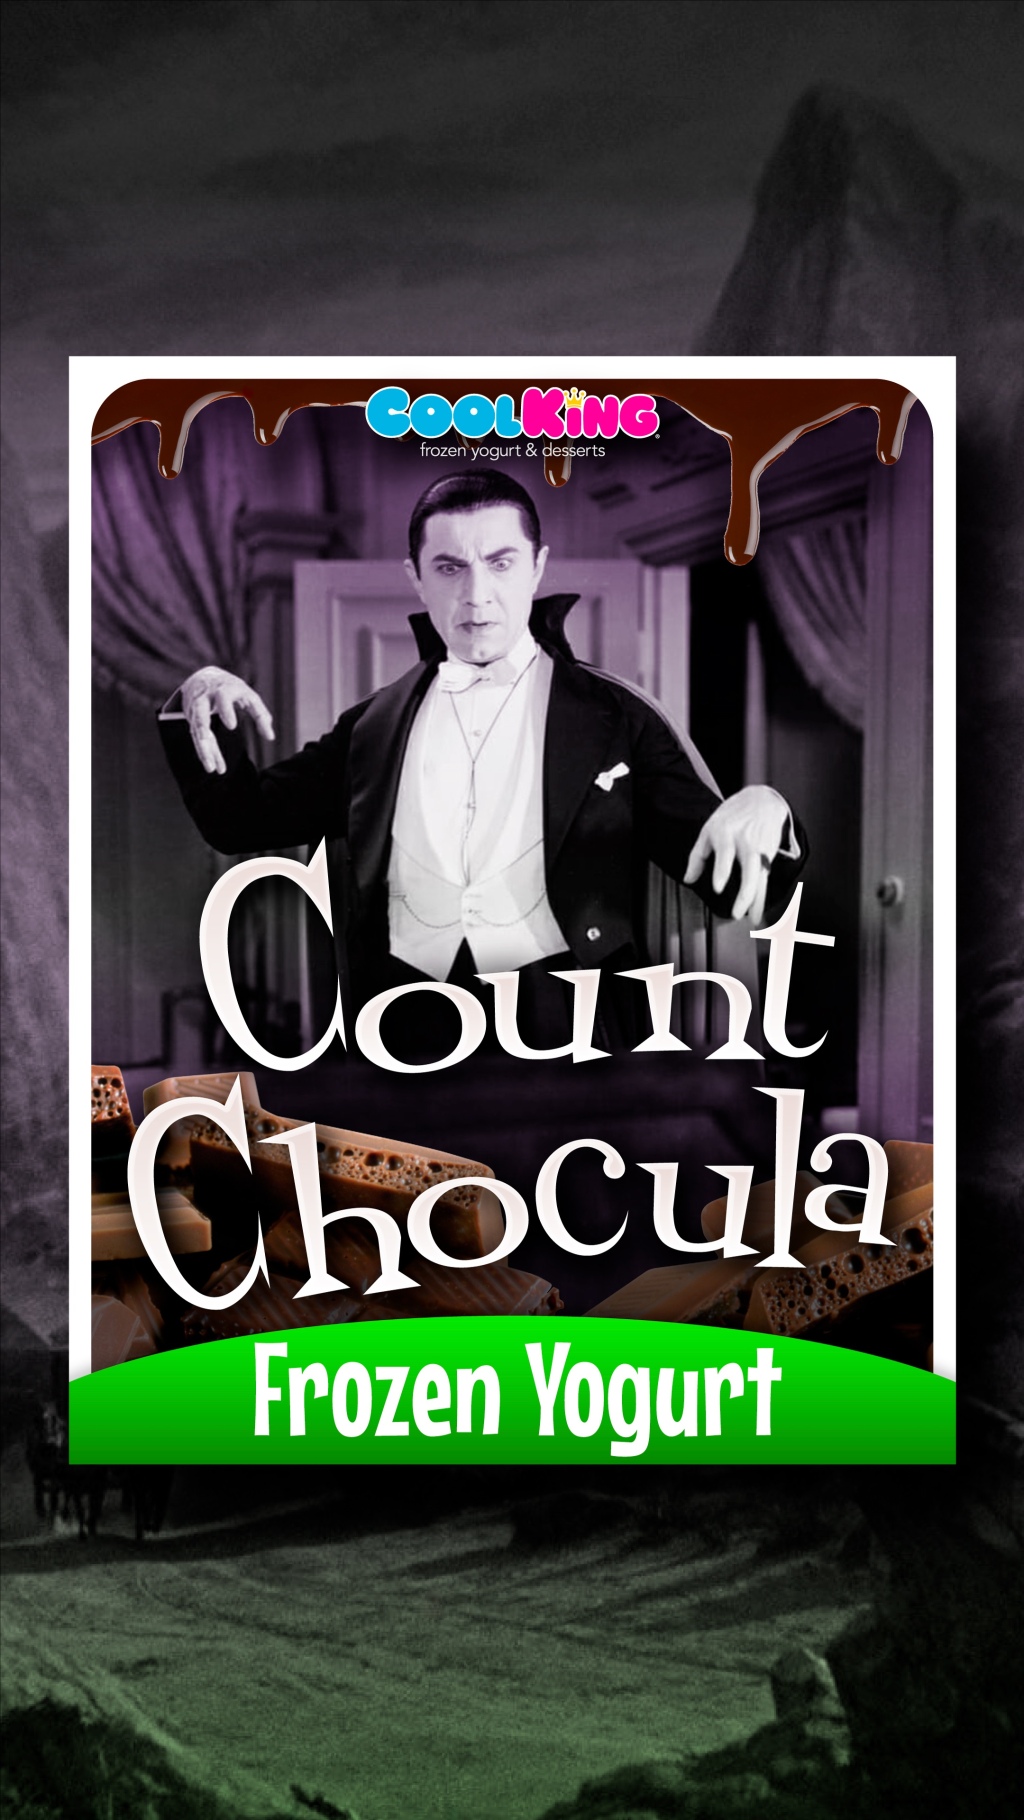 Cool King® “Count Chocula” Frozen Yogurt